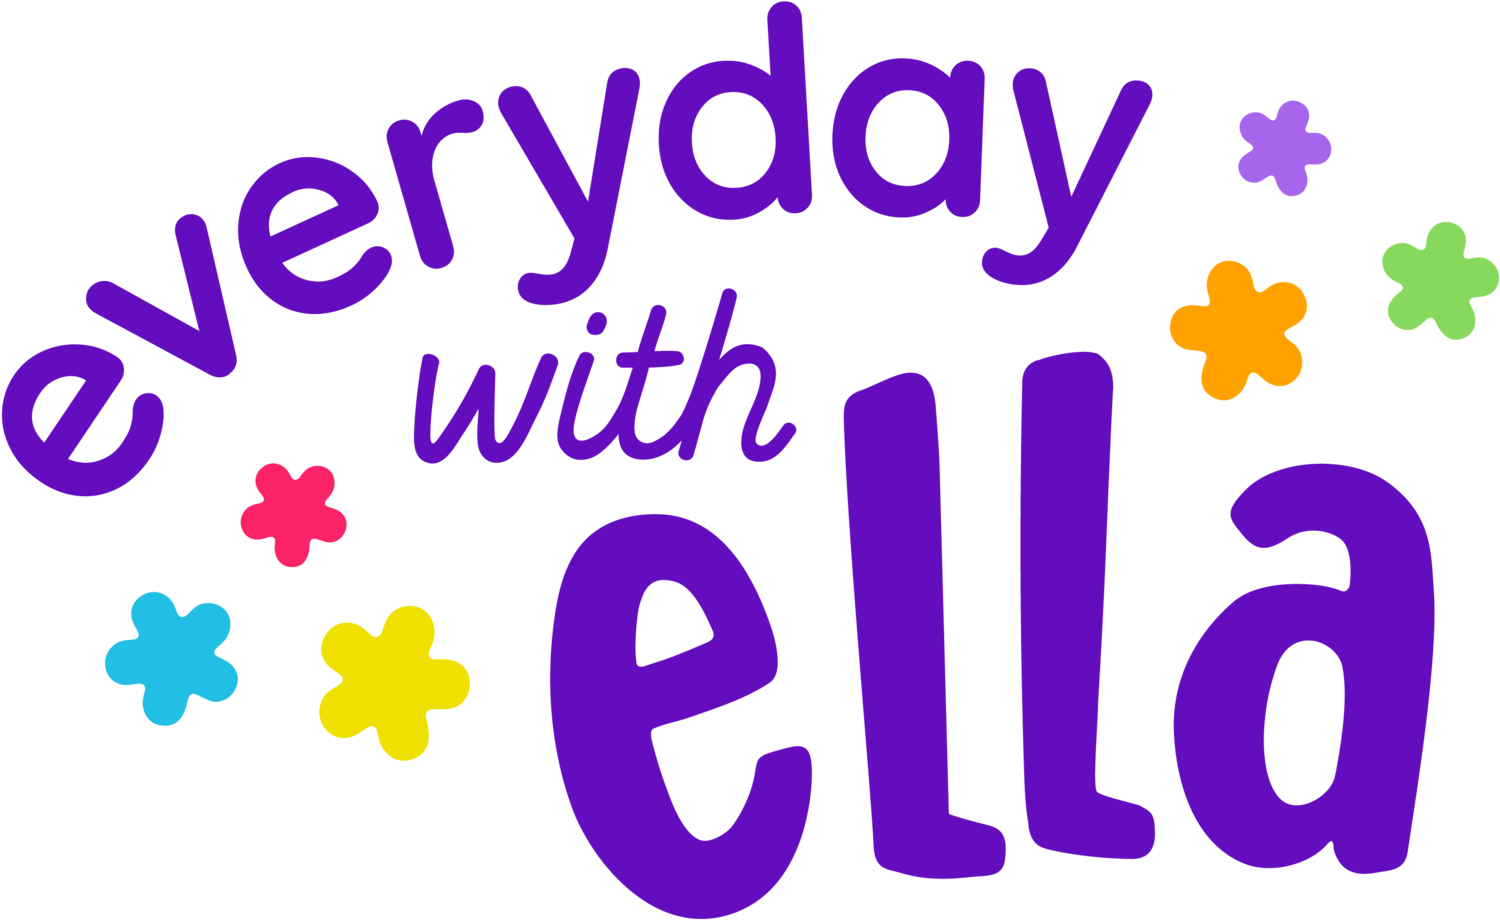 Everyday with Ella